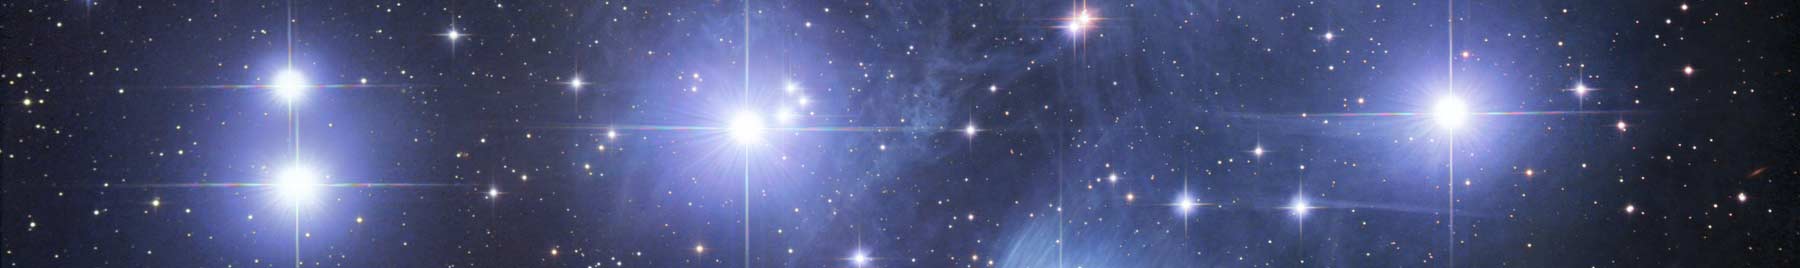 white an blue stars in a black sky: Pleiades star cluster